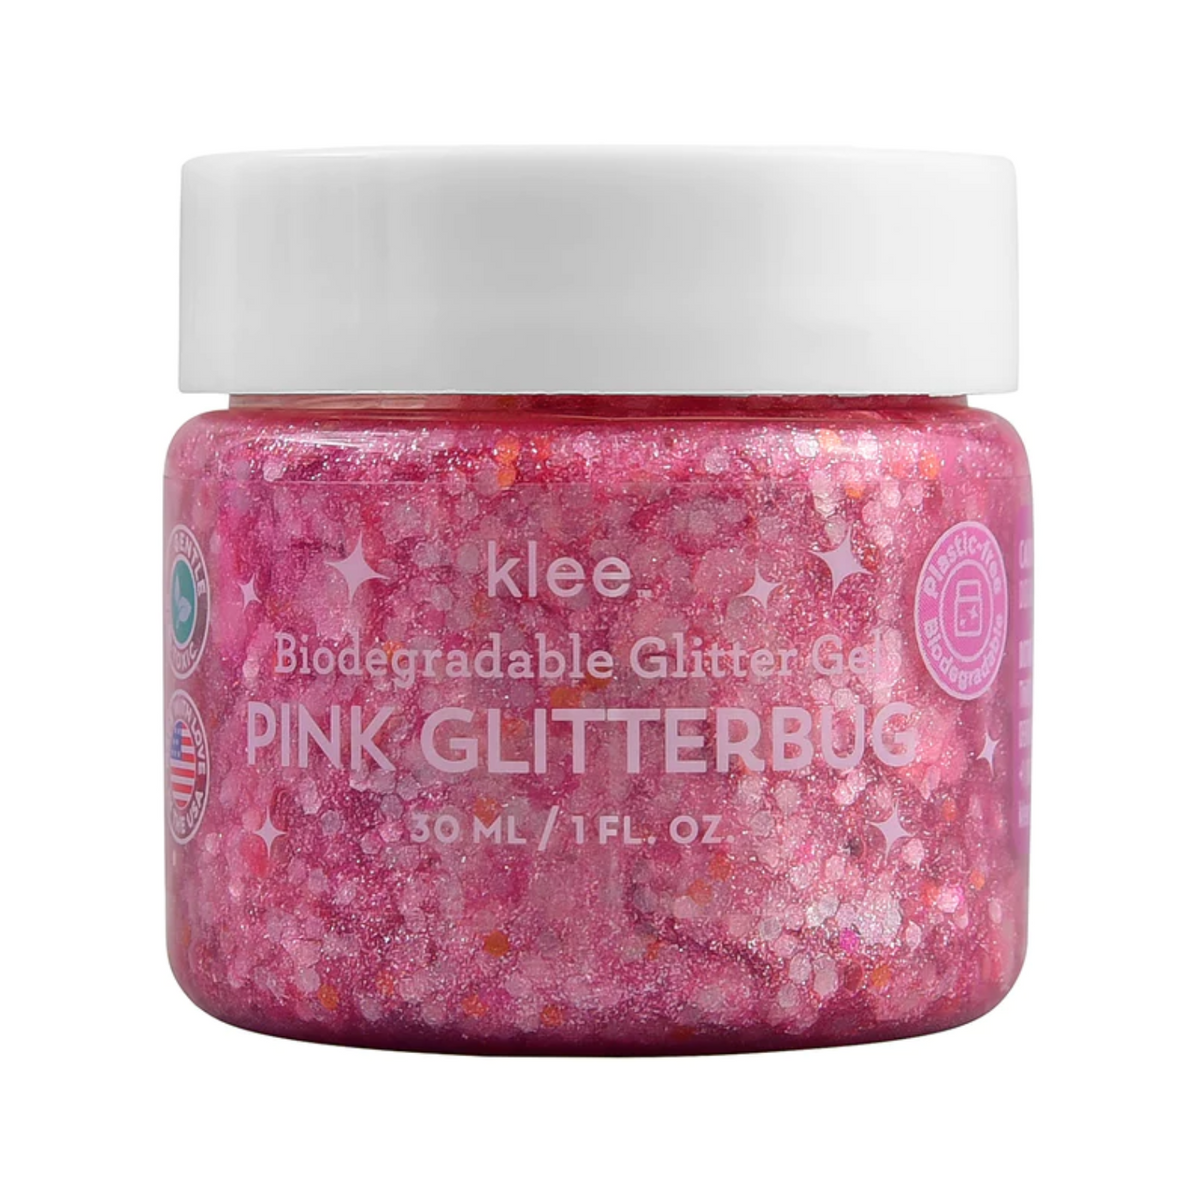 Pink Glitterbug Biodegradable Glitter Gel